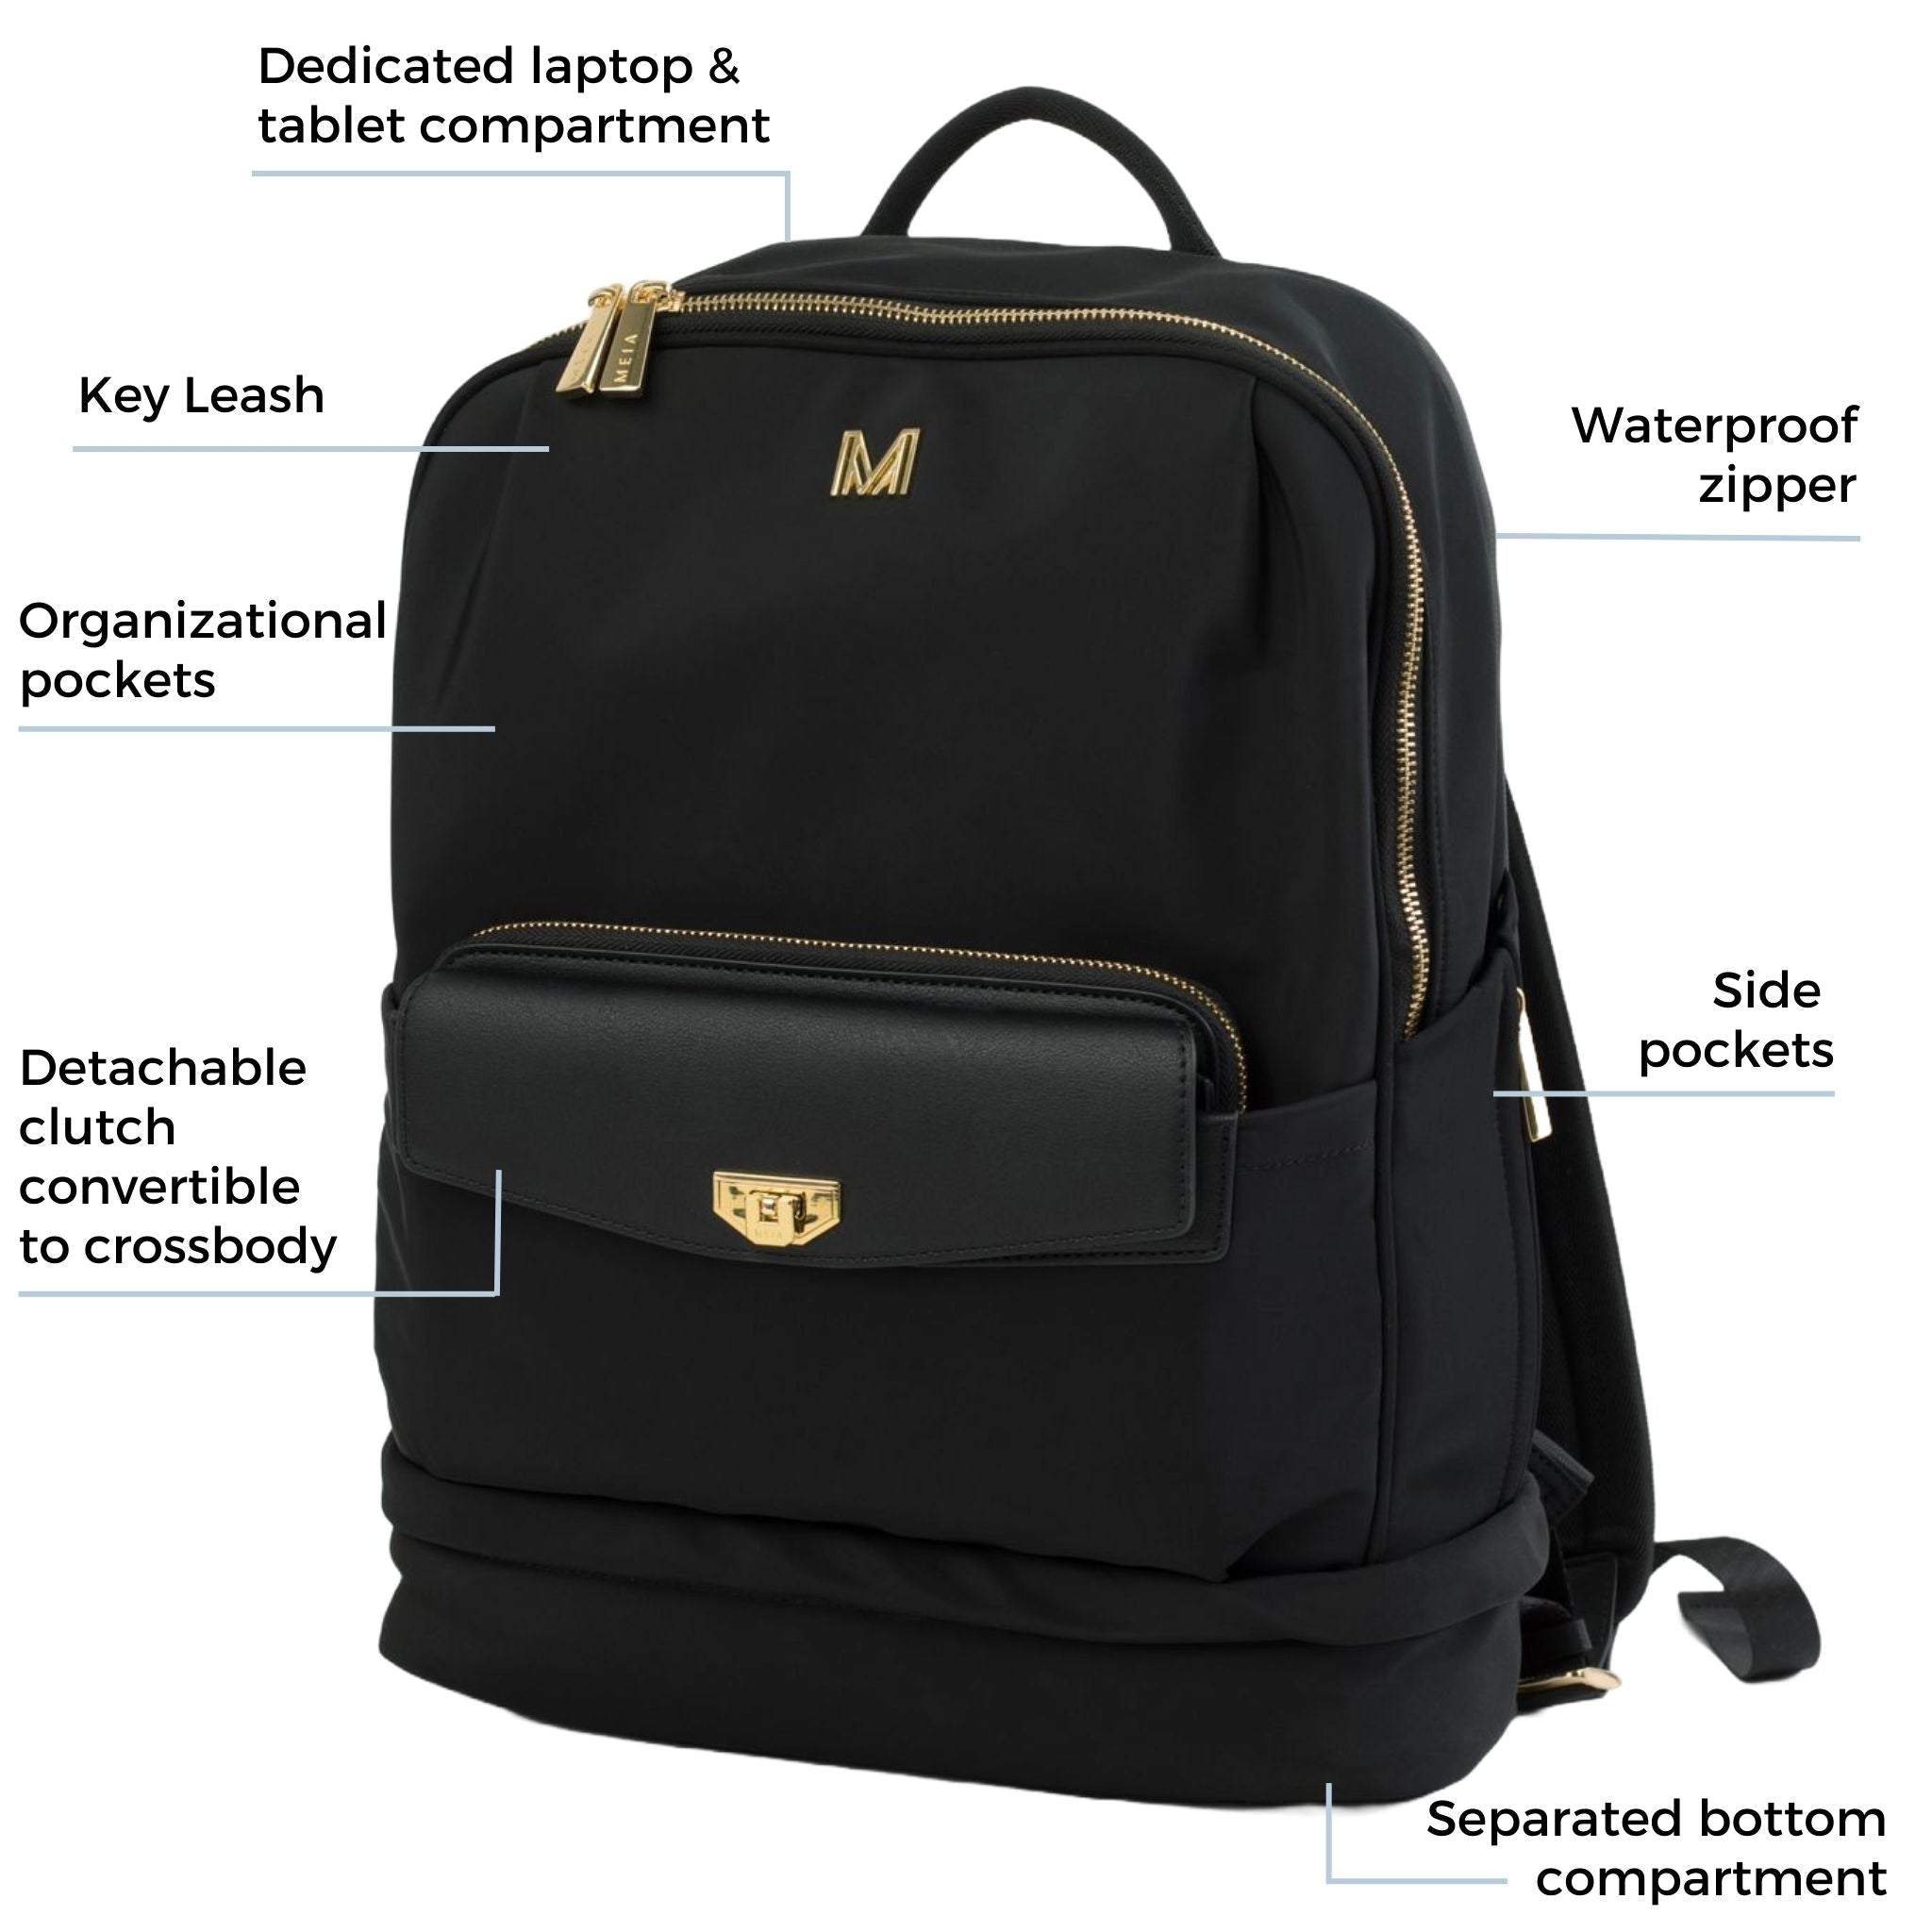 MEIA multifunctional work travel bag features